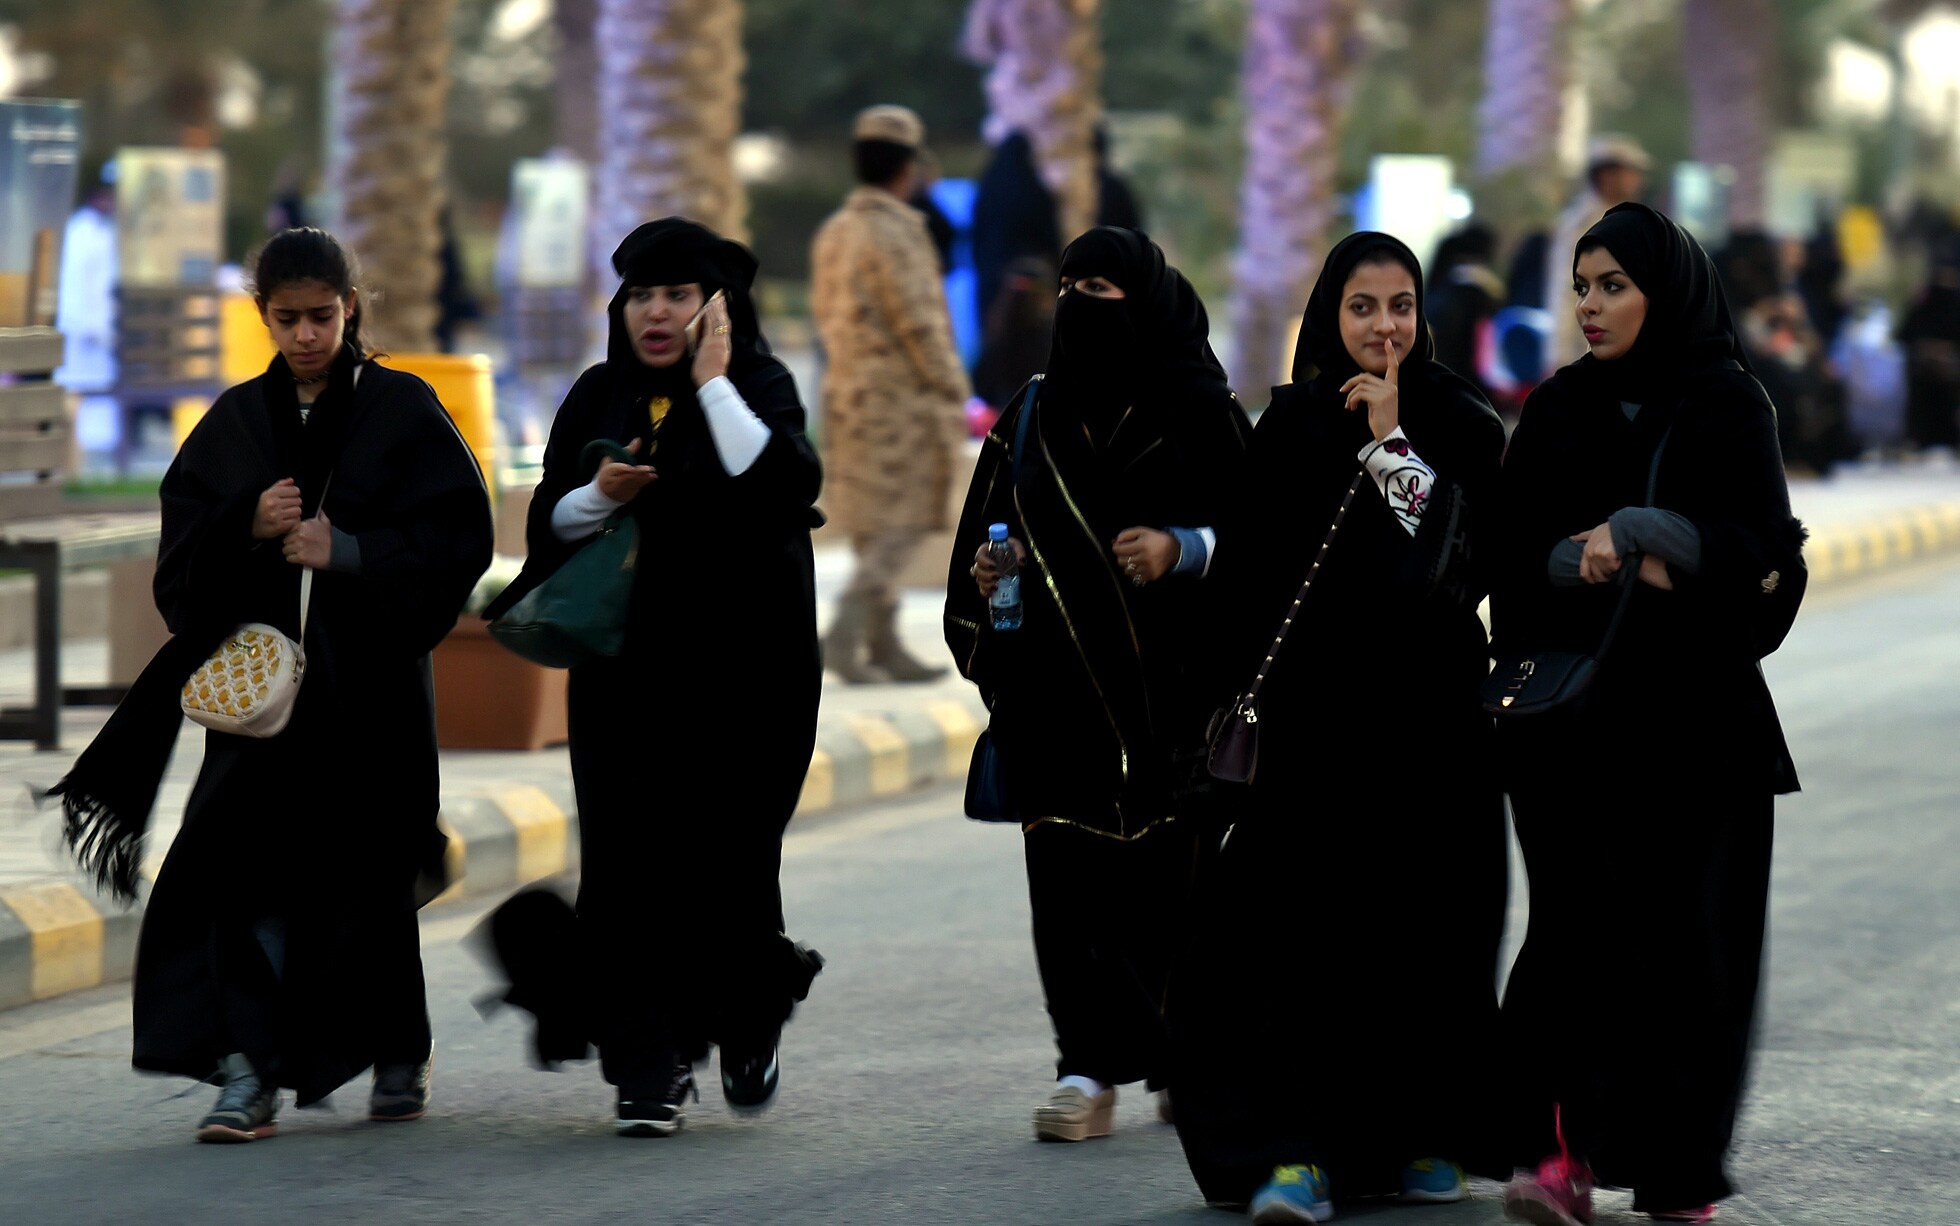 Saudi women in robes